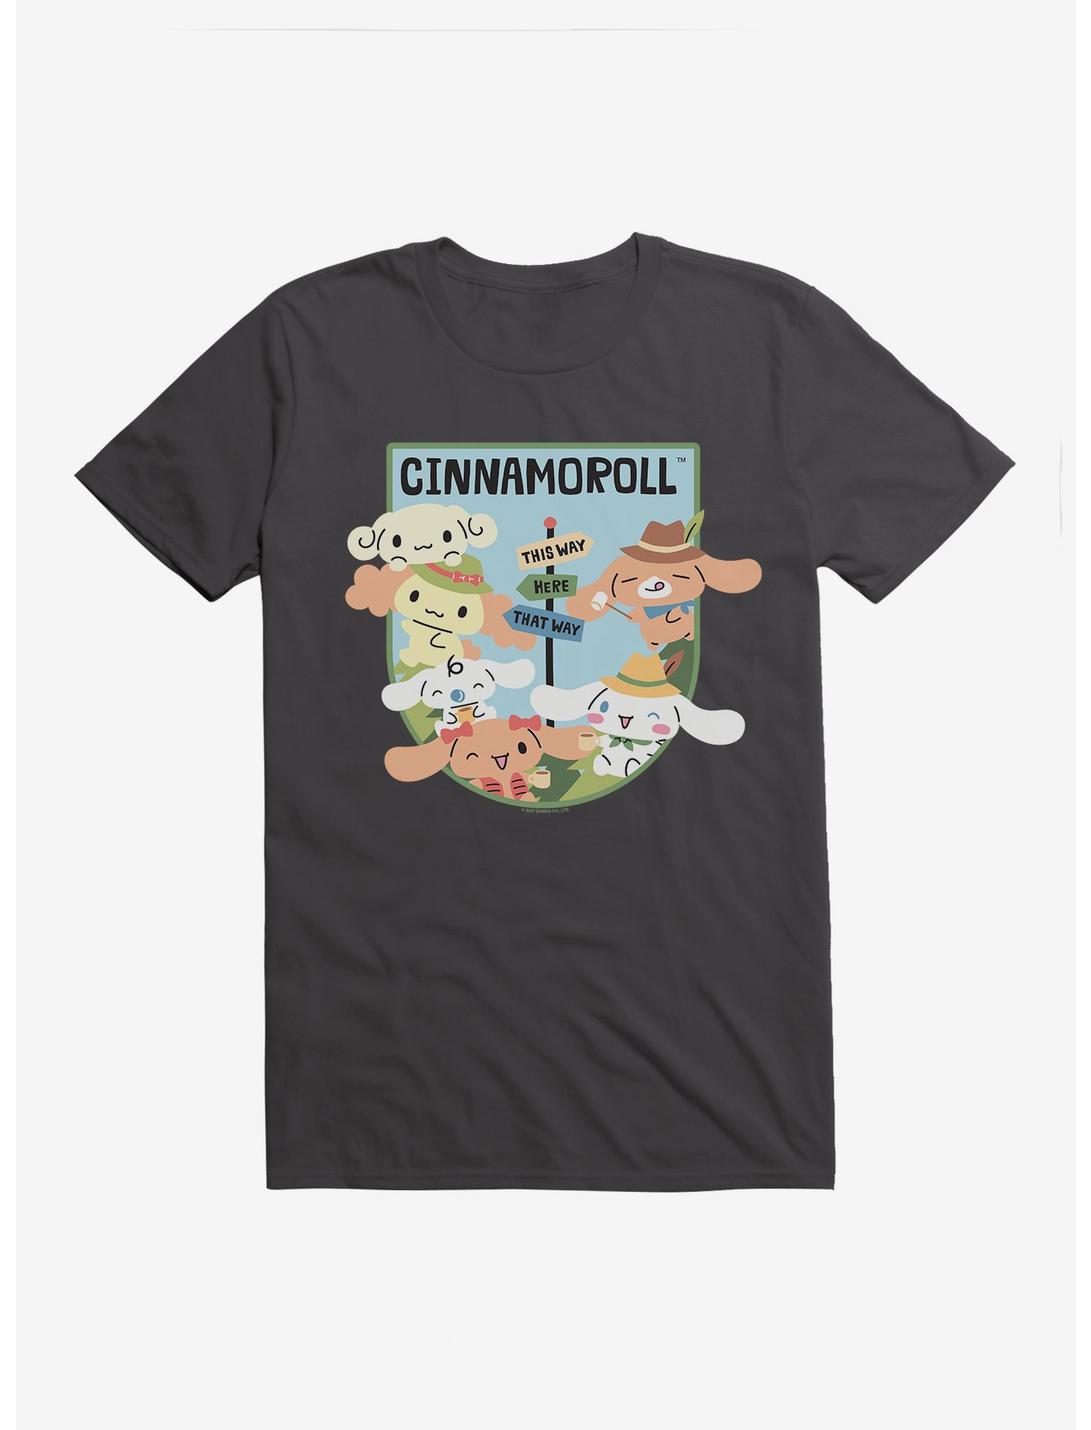 Cinnamoroll This Way Here That Way T-Shirt, DARK GREY, hi-res